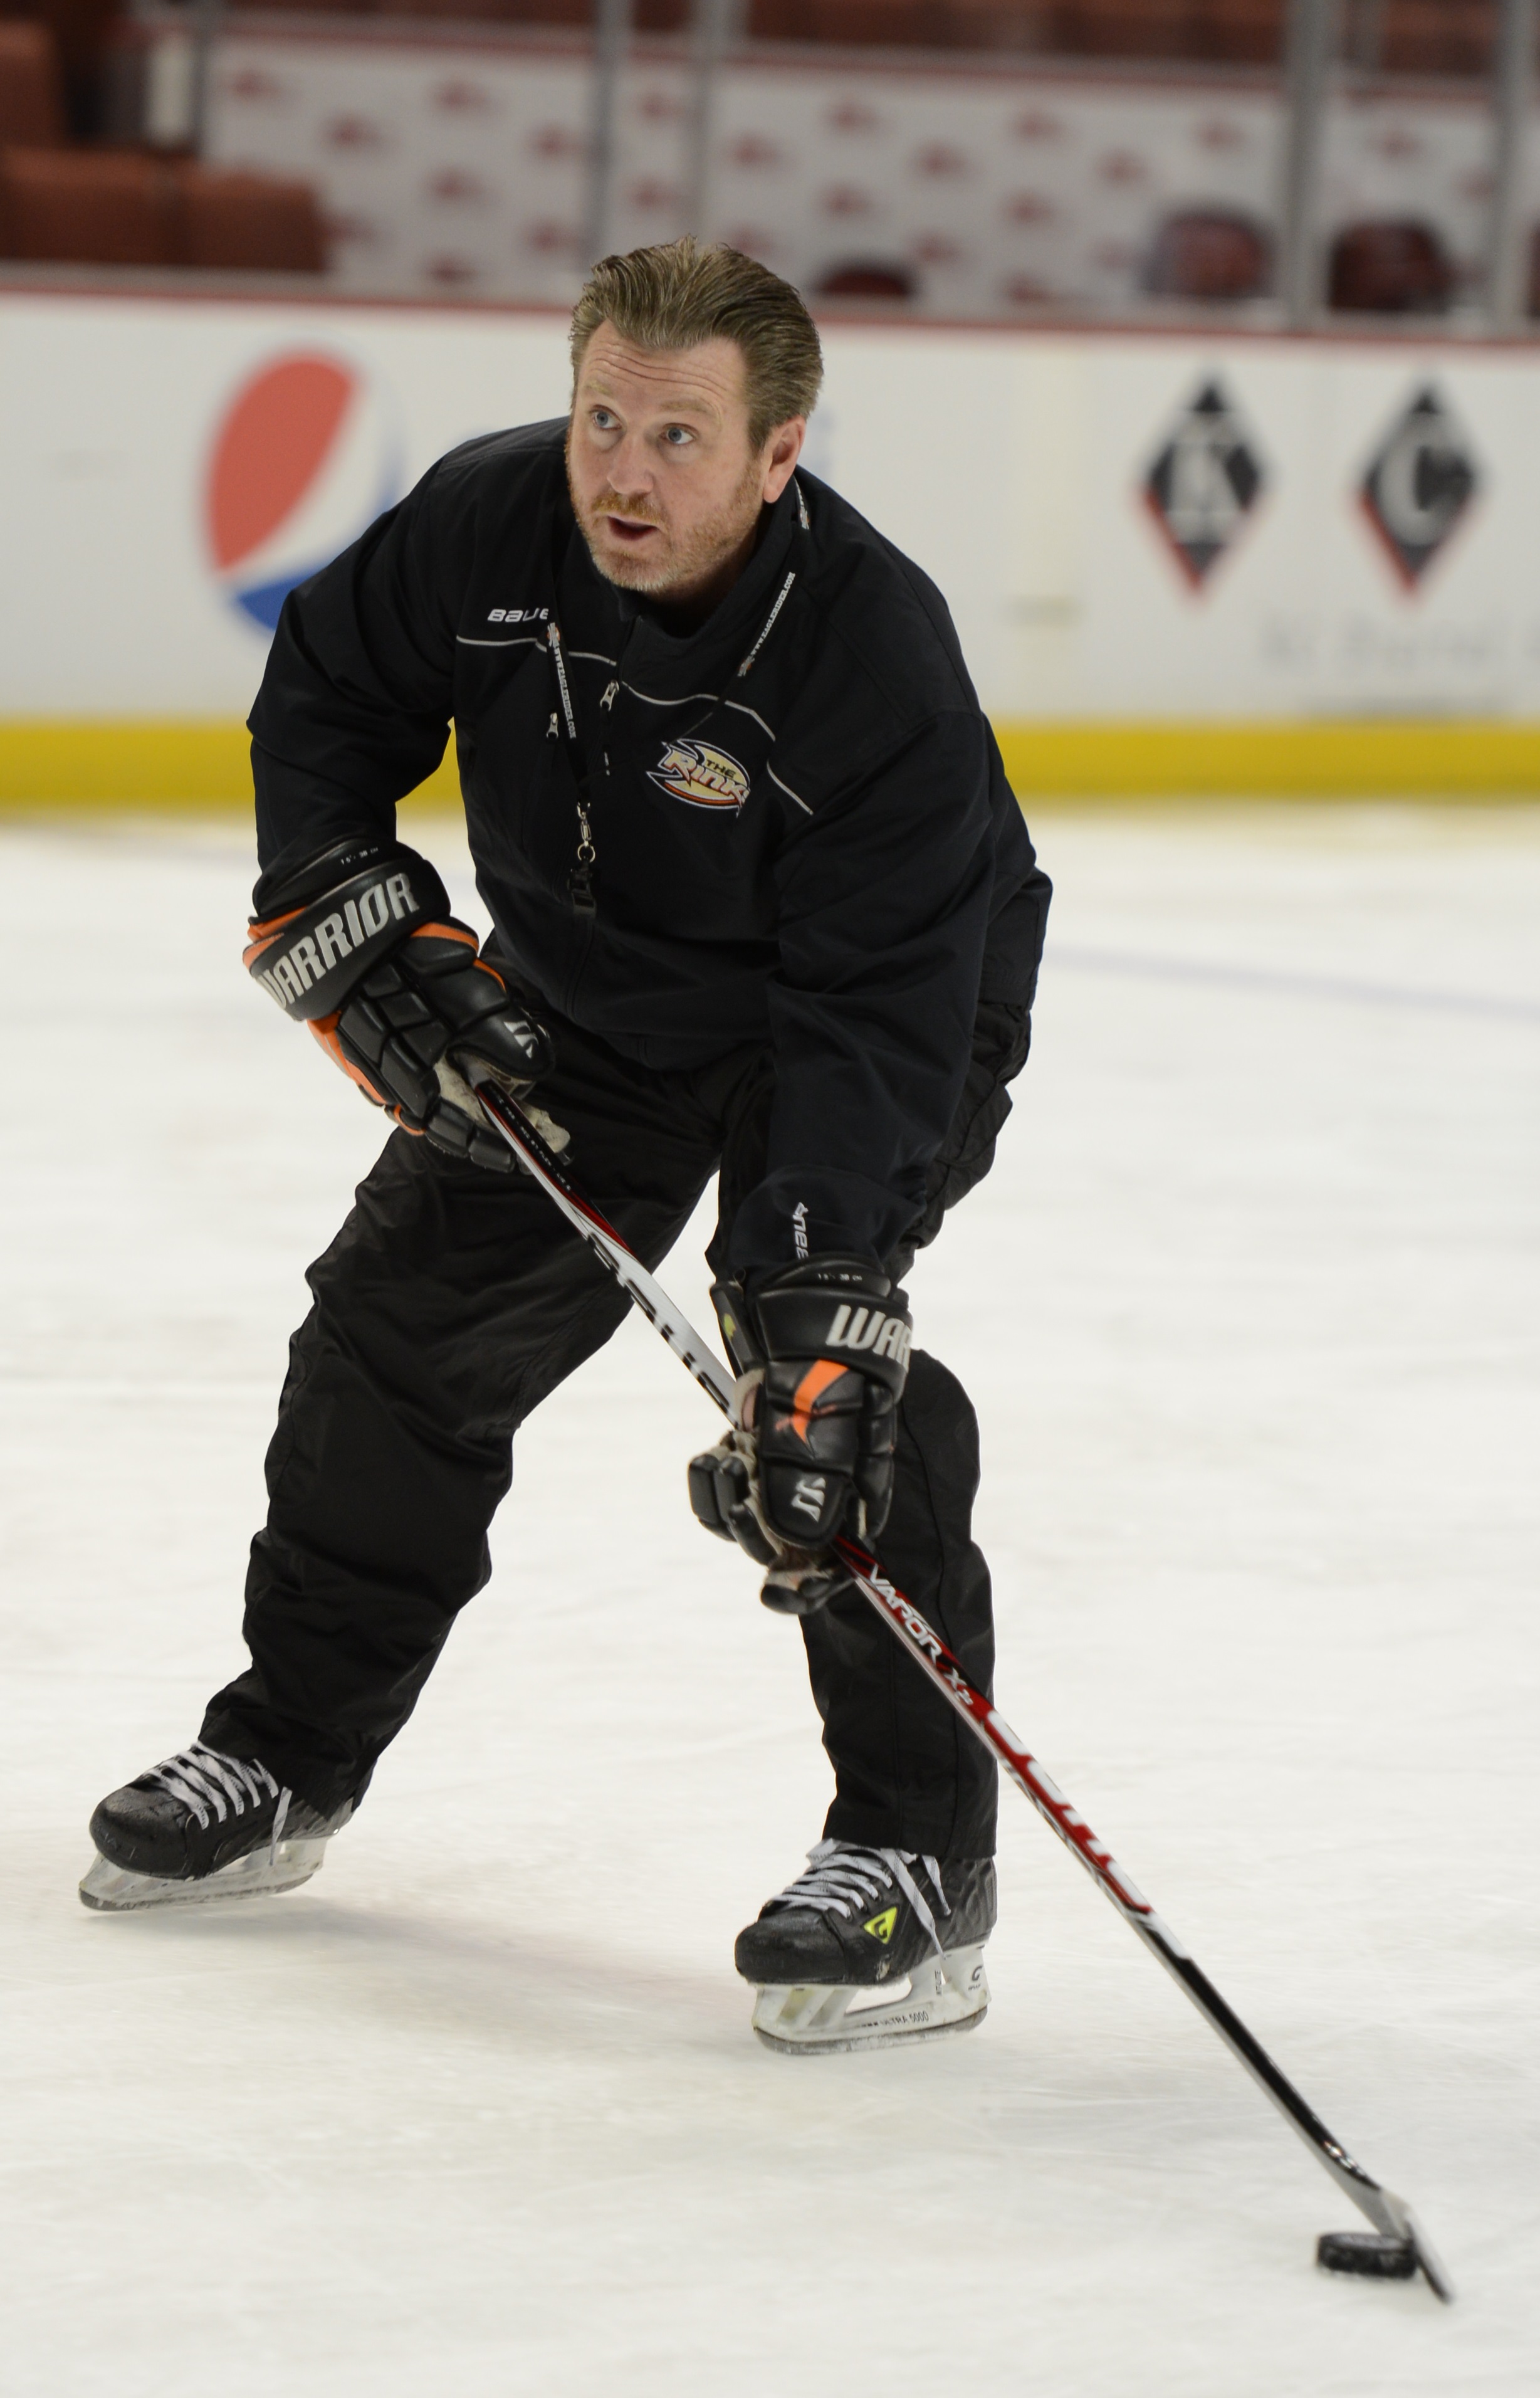 Rick Hutchinson, Director of Hockey